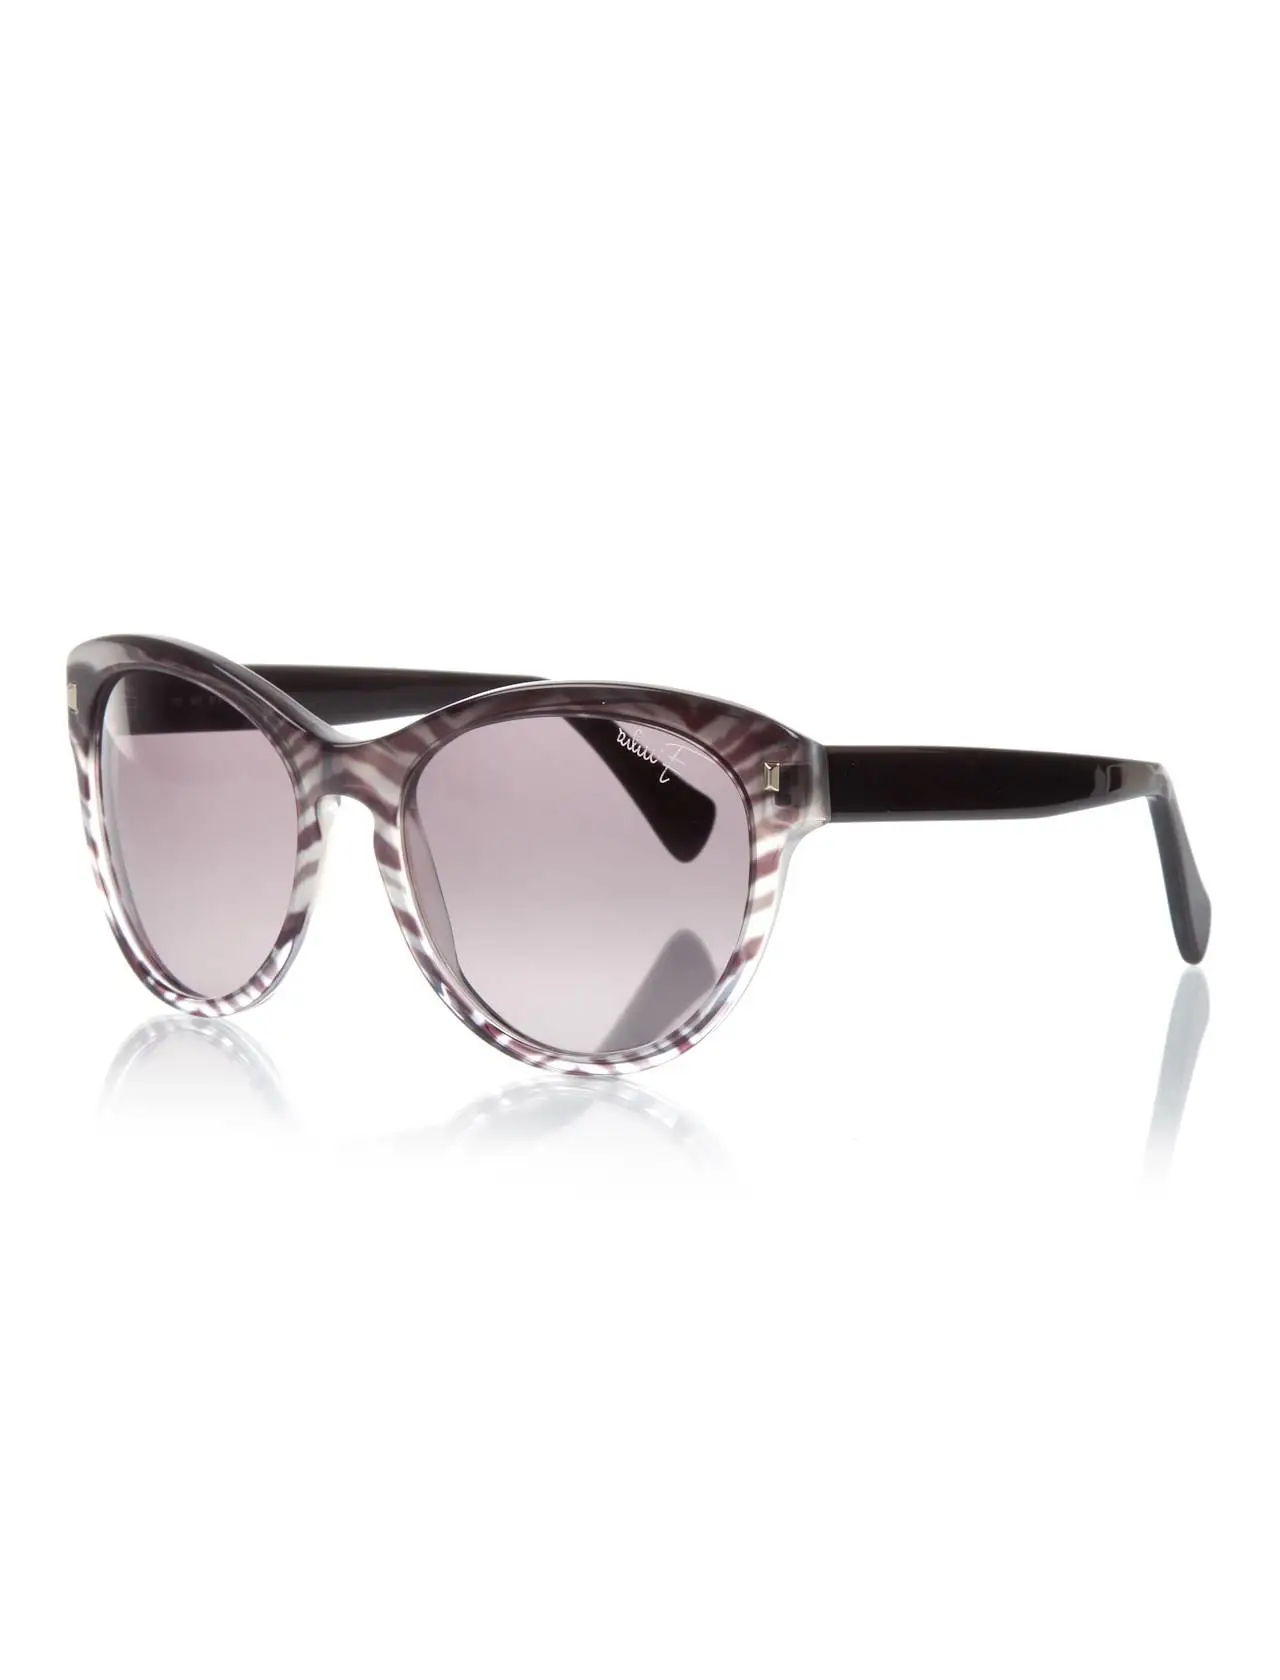 

Women's sunglasses ep 735 006 bone smoked organic oval aval 56-18-135 emilio pucci